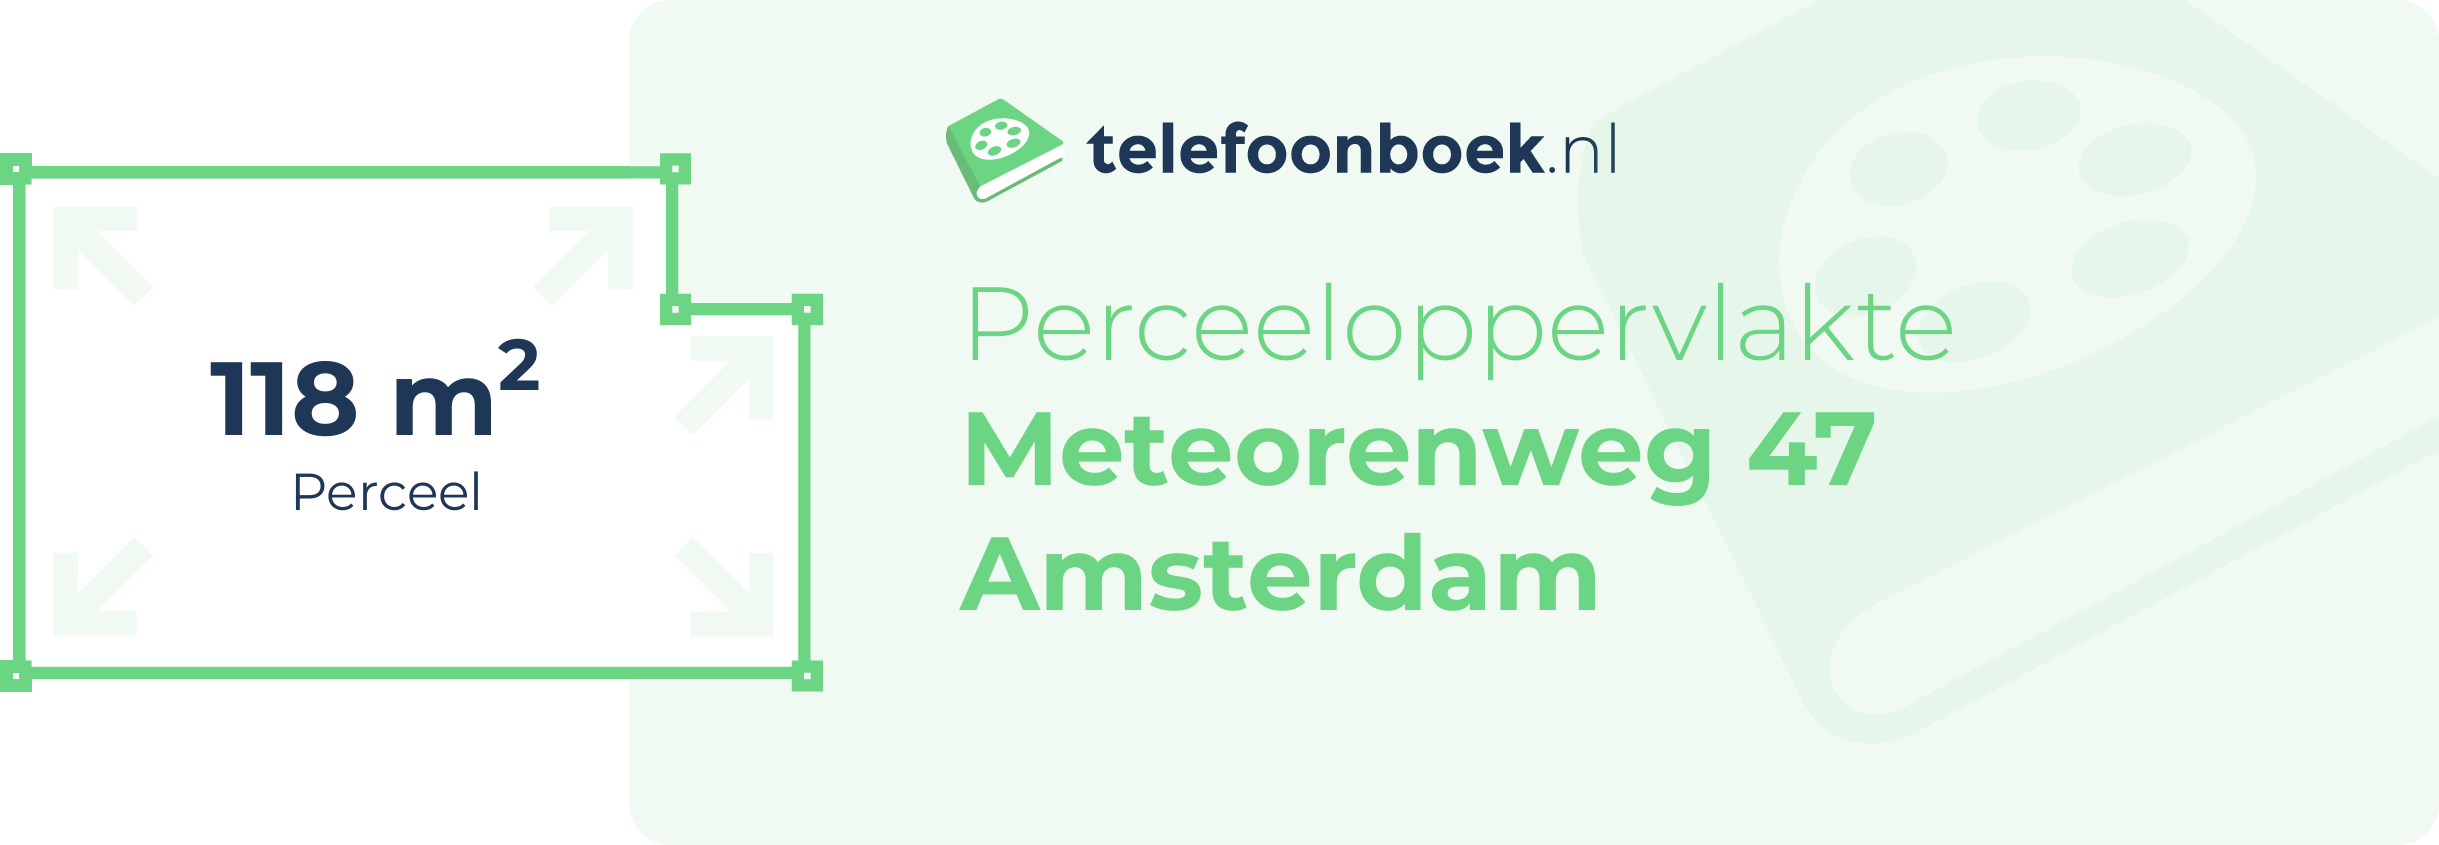 Perceeloppervlakte Meteorenweg 47 Amsterdam